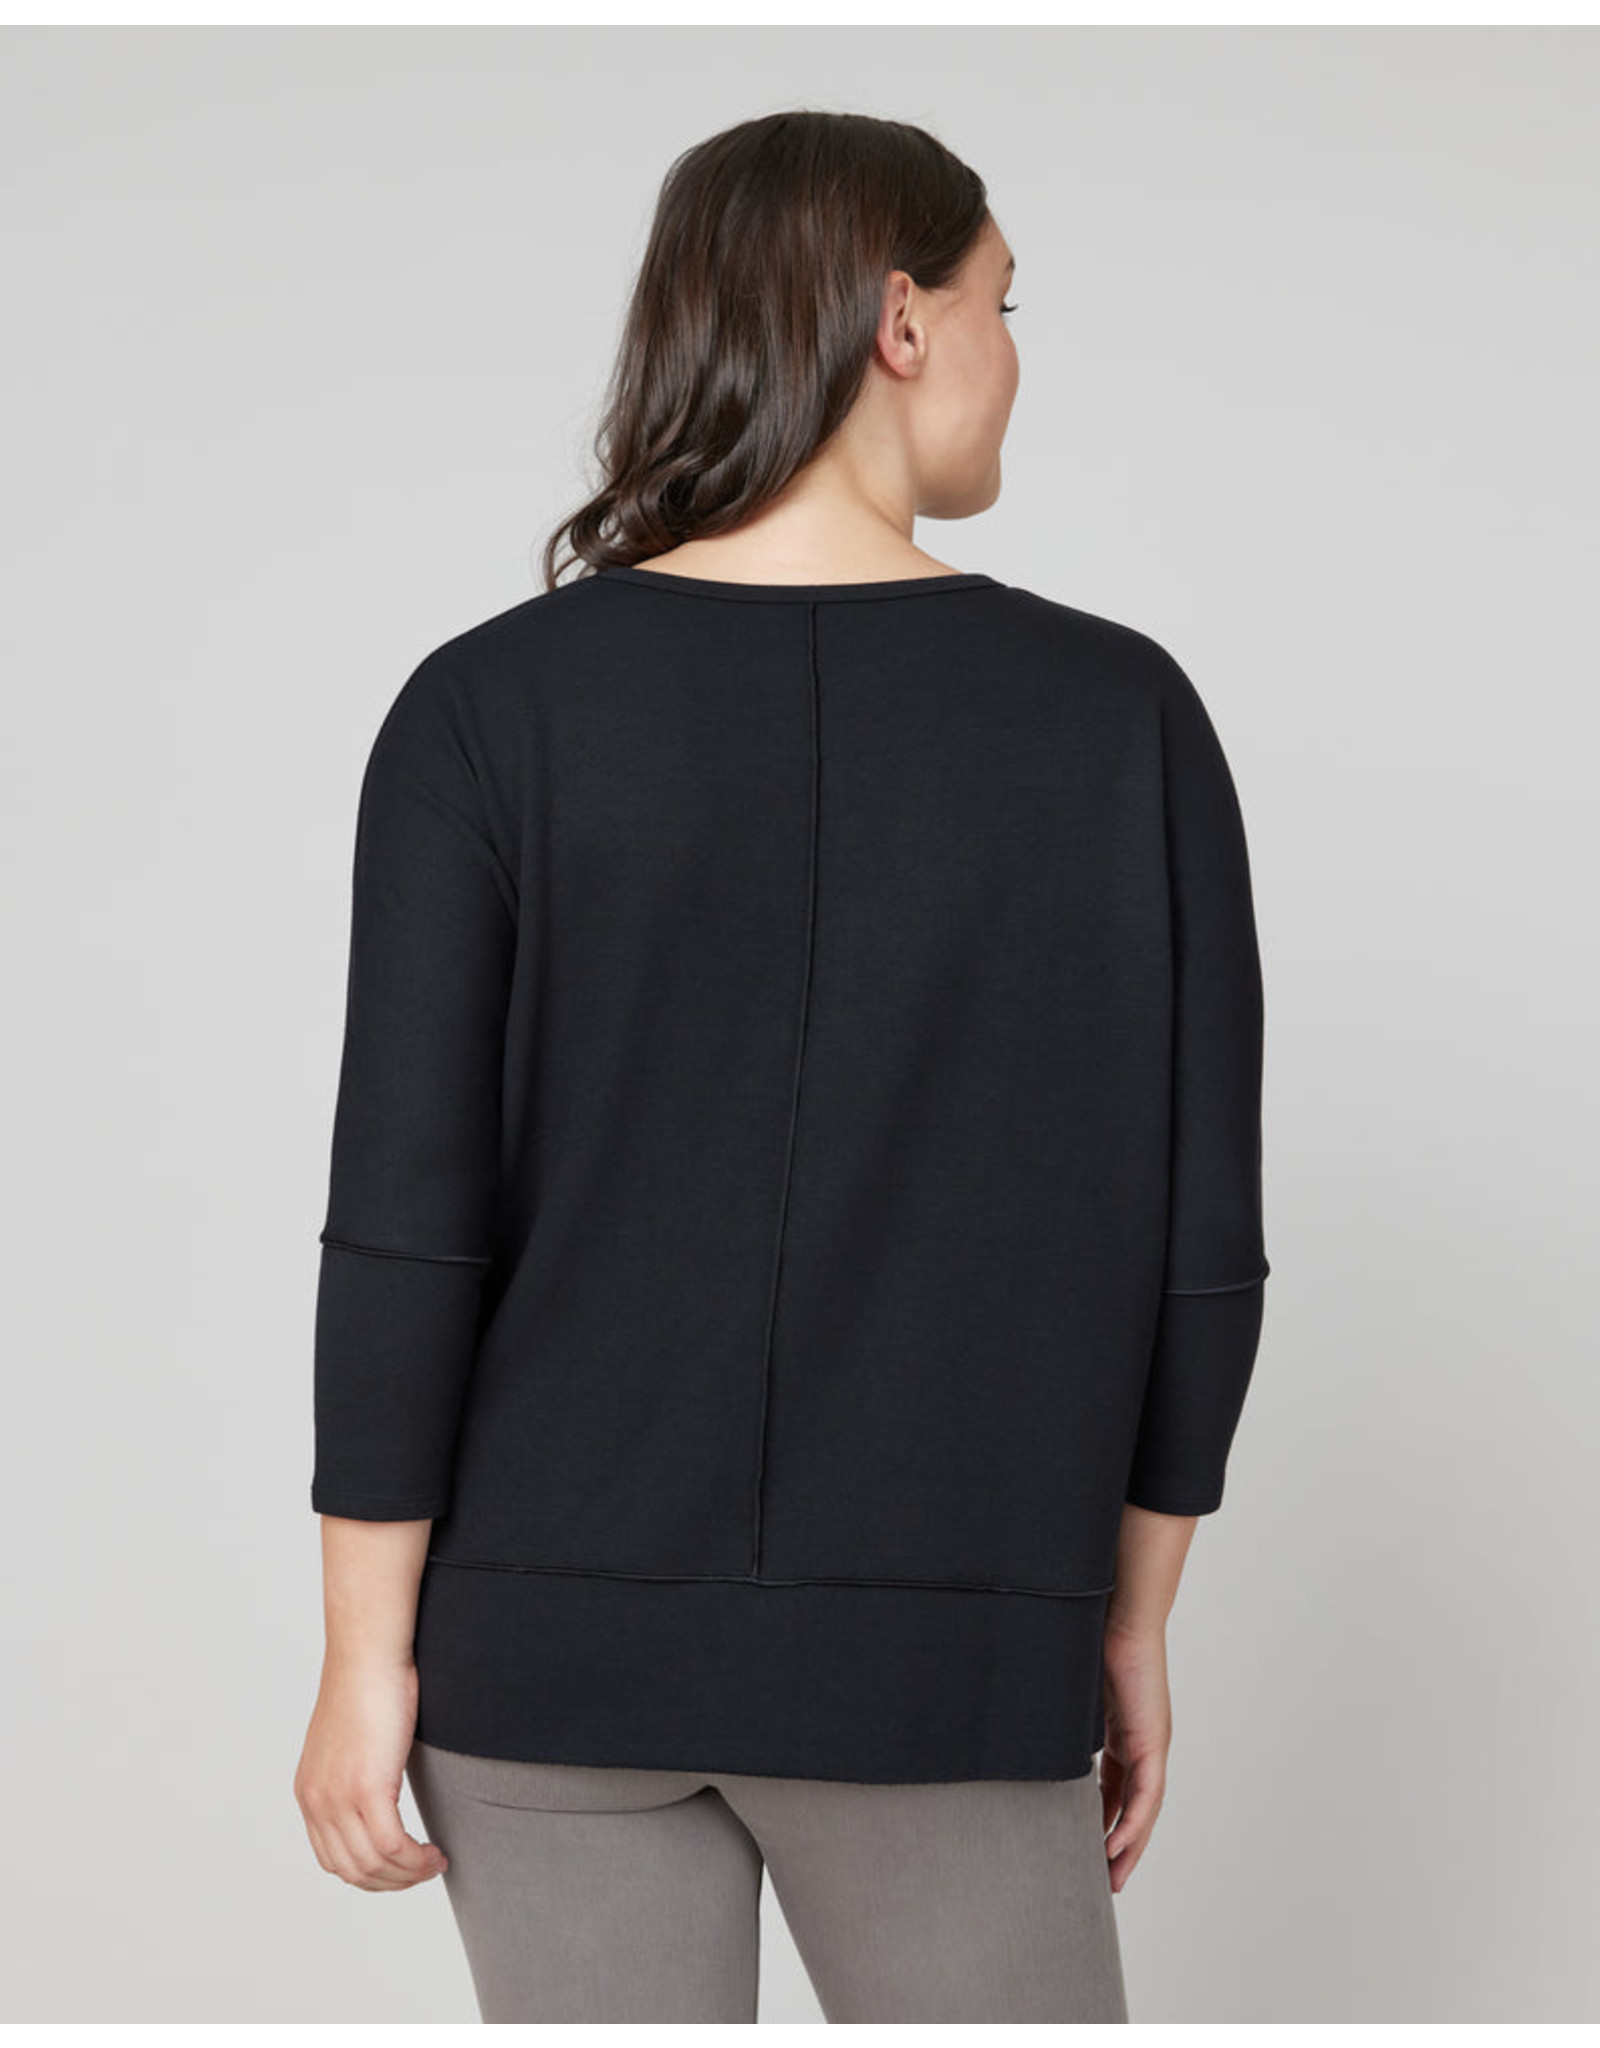 SPANX Black Perfect Length Sweatshirt Size S Women's Top Dolman 3